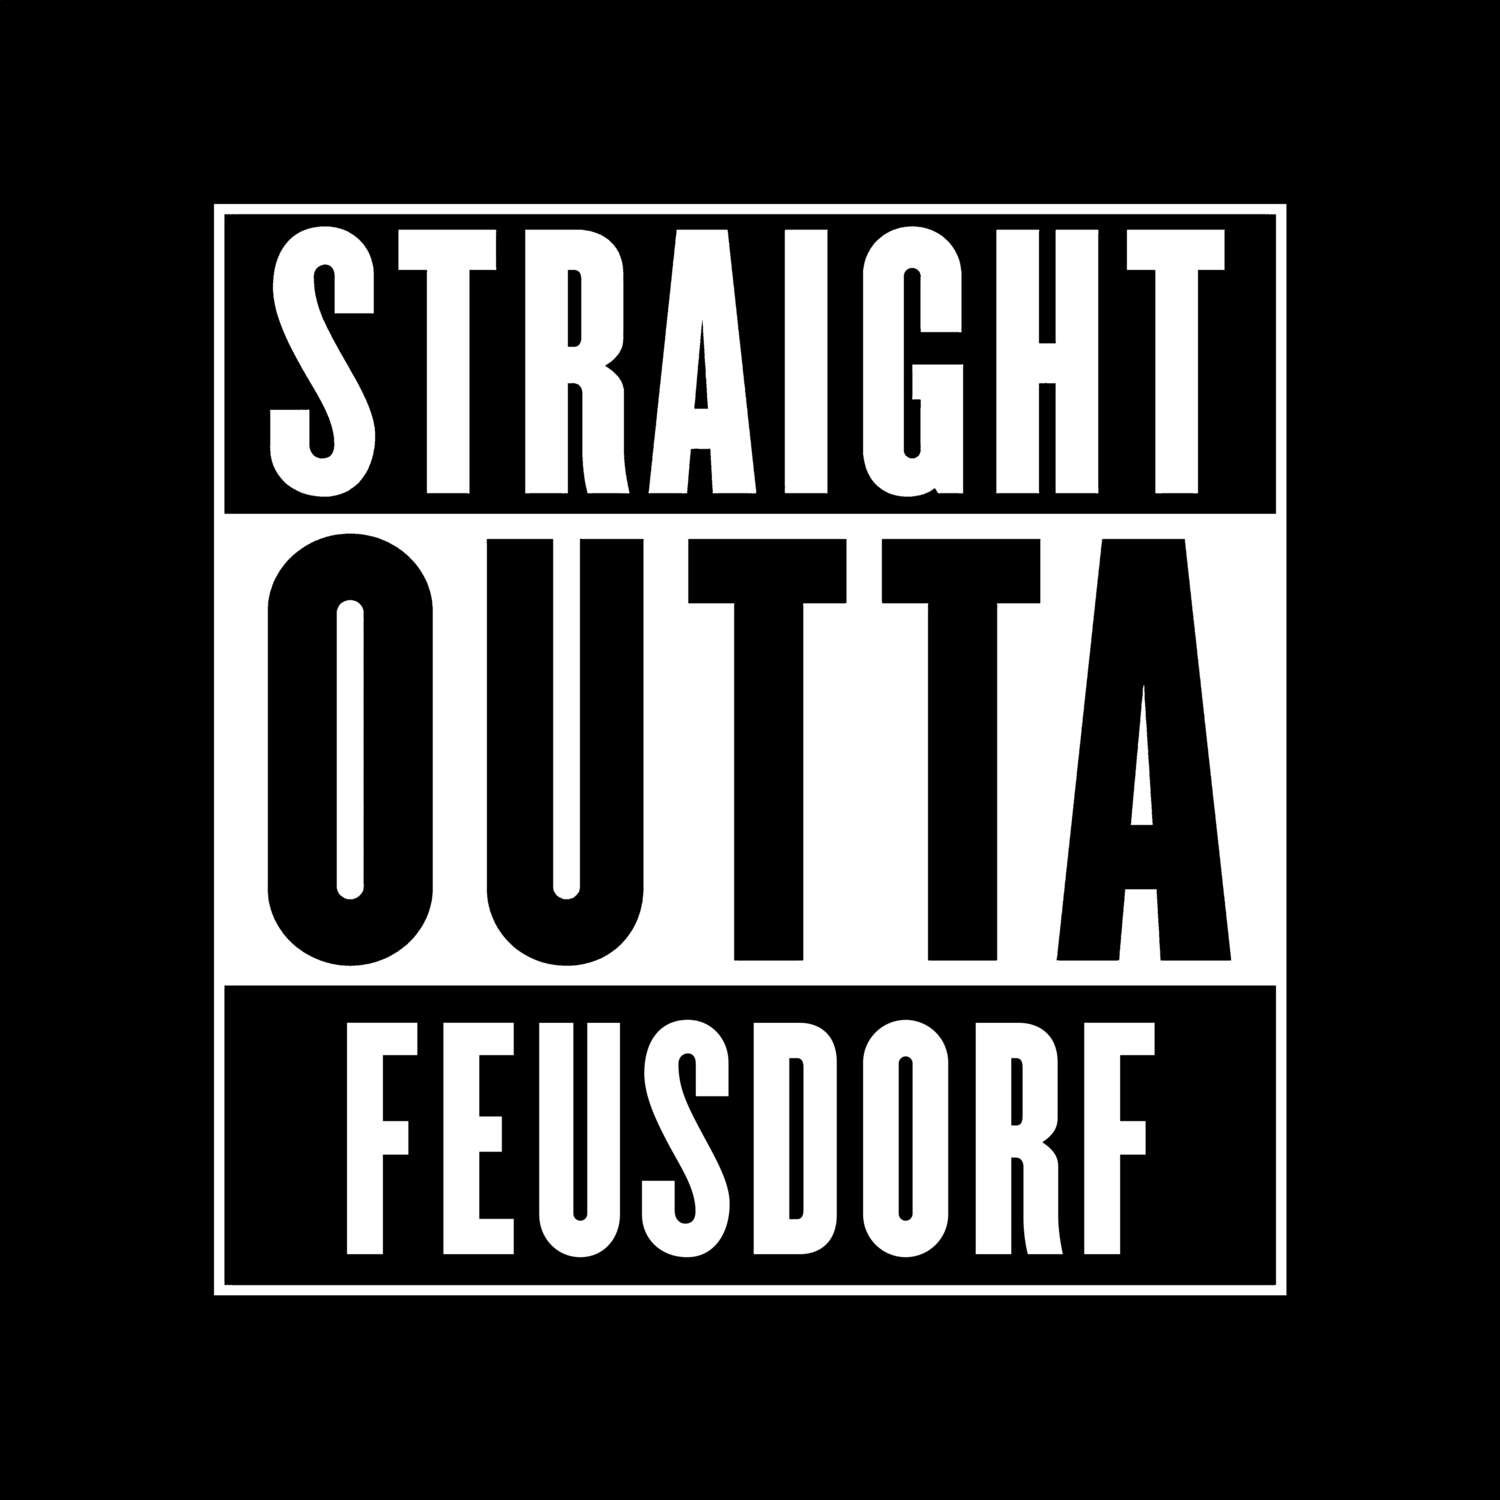 Feusdorf T-Shirt »Straight Outta«